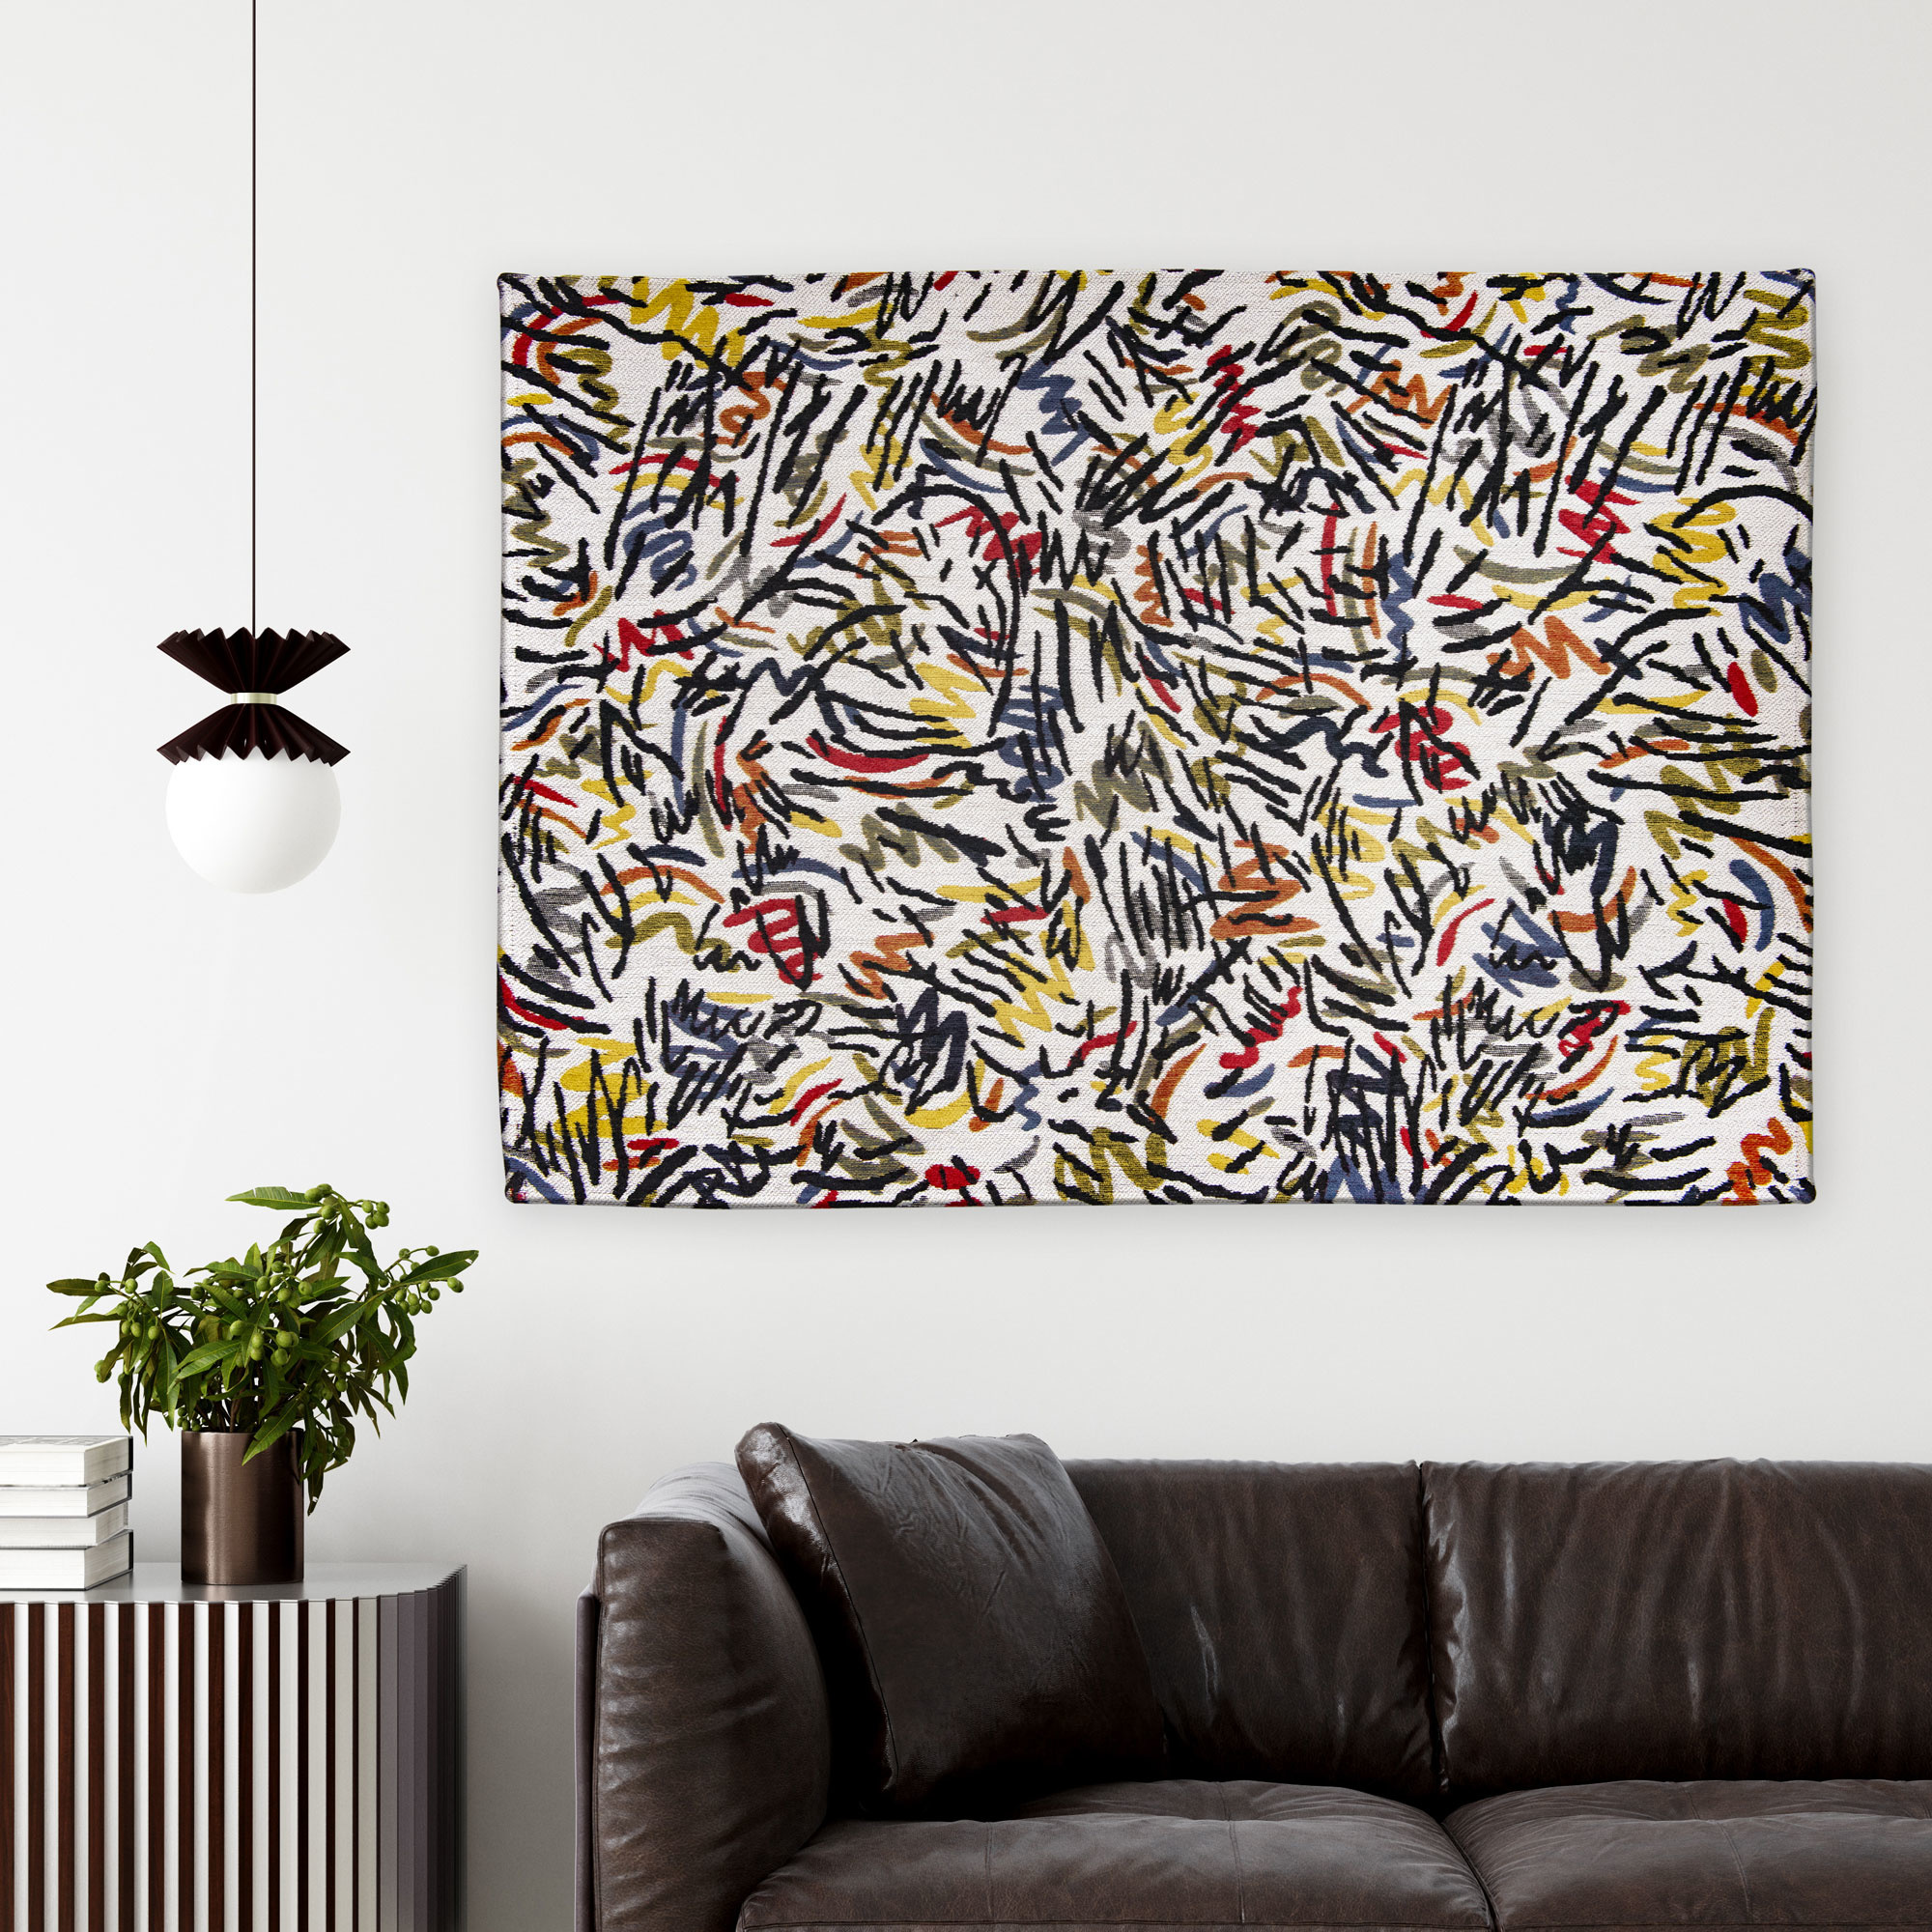 Flatwoven Street Art Rug ☞ Size: 8' x 11' 2" (240 x 340 cm)